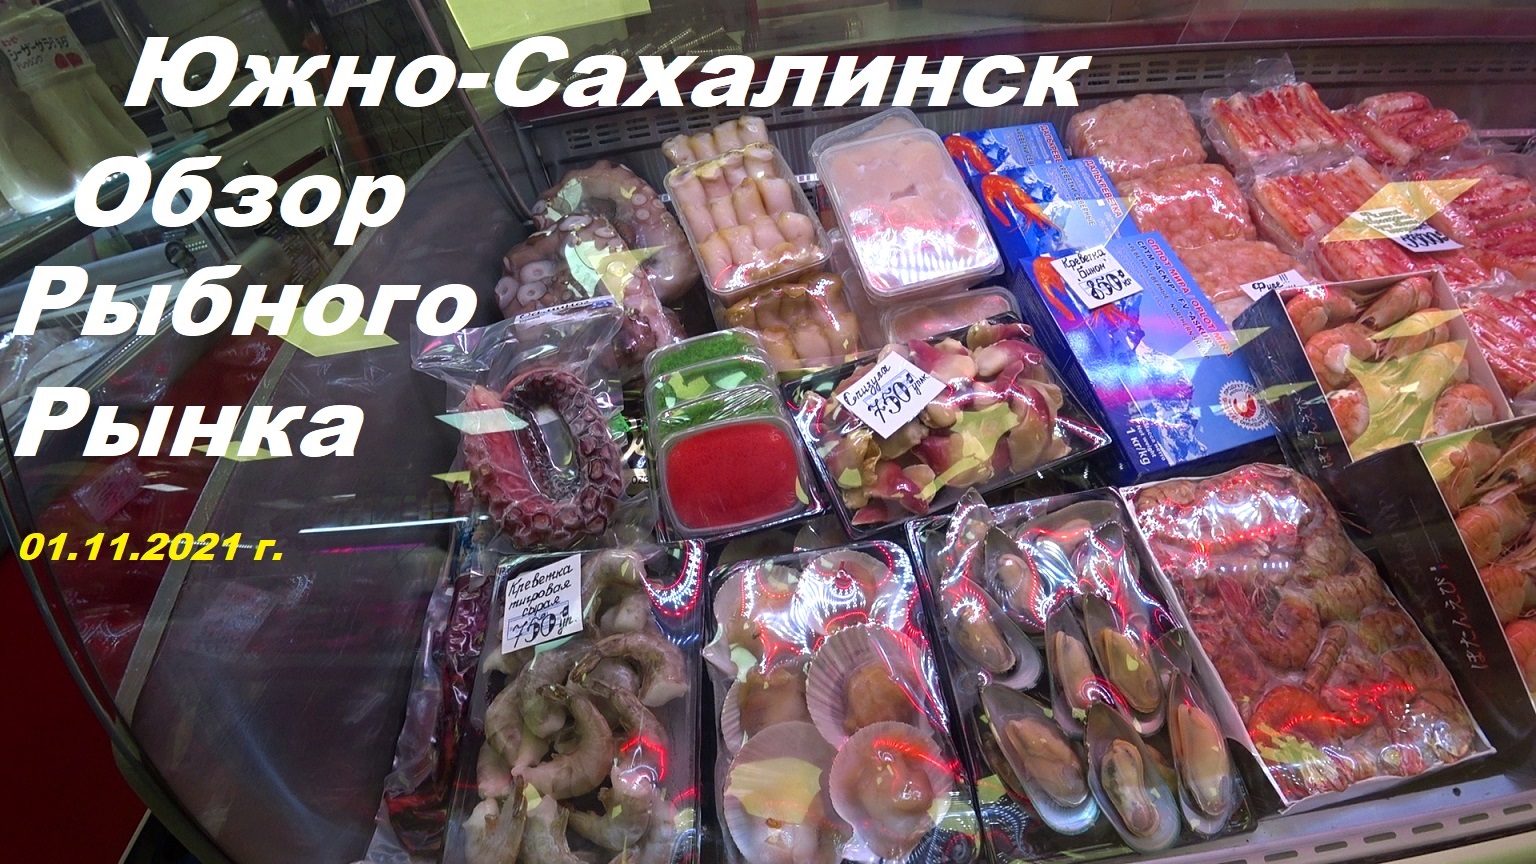 Обзор рыбного рынка Южно-Сахалинска 01.11.2021 г.